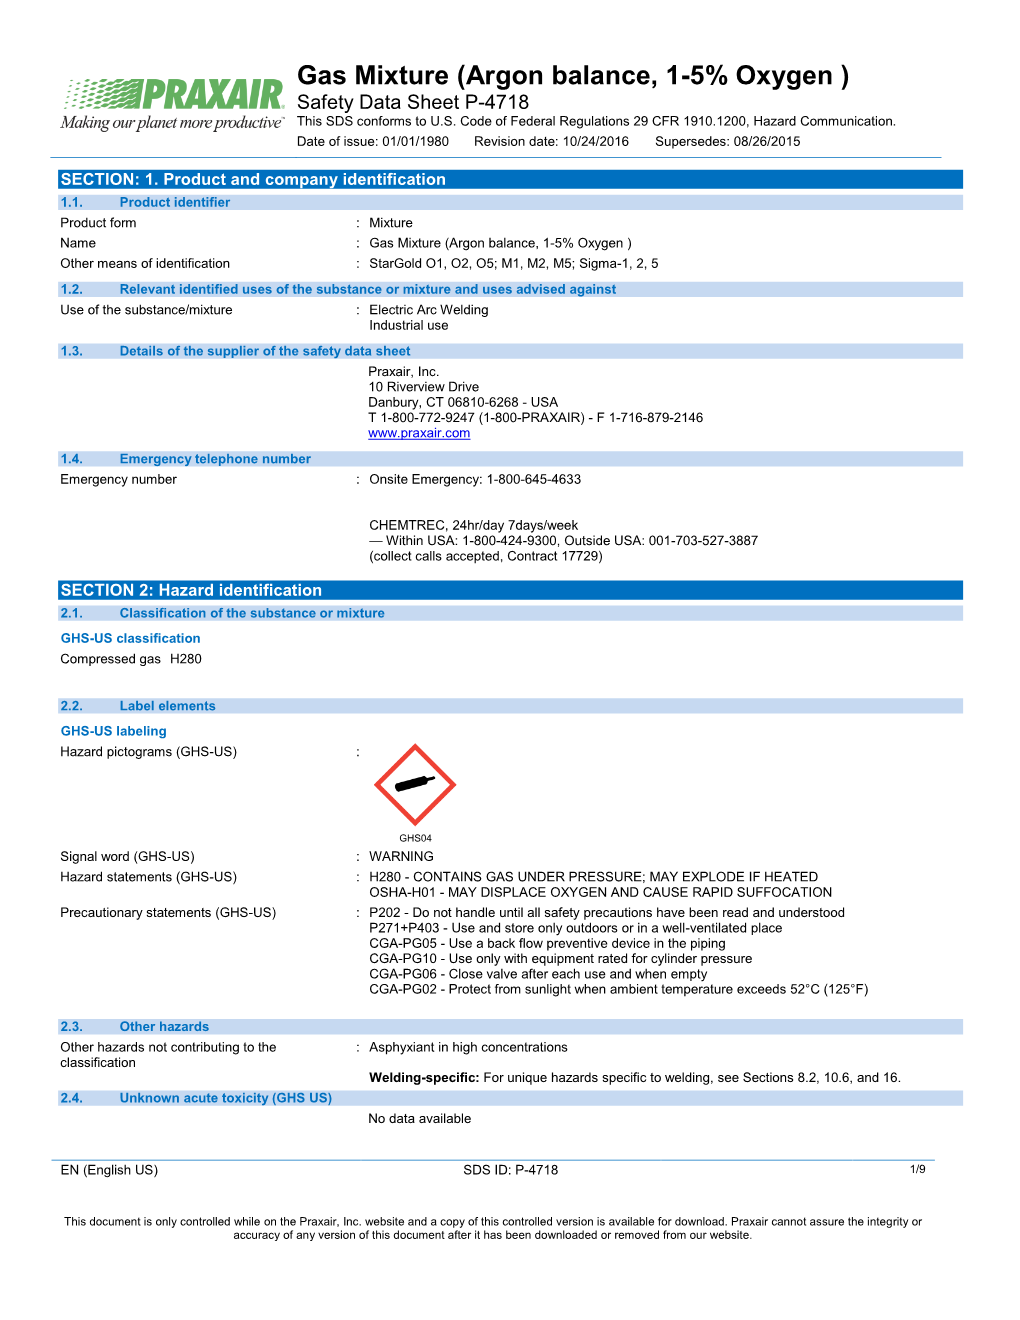 (Argon Balance, 1-5% Oxygen) Safety Data Sheet SDS P4718